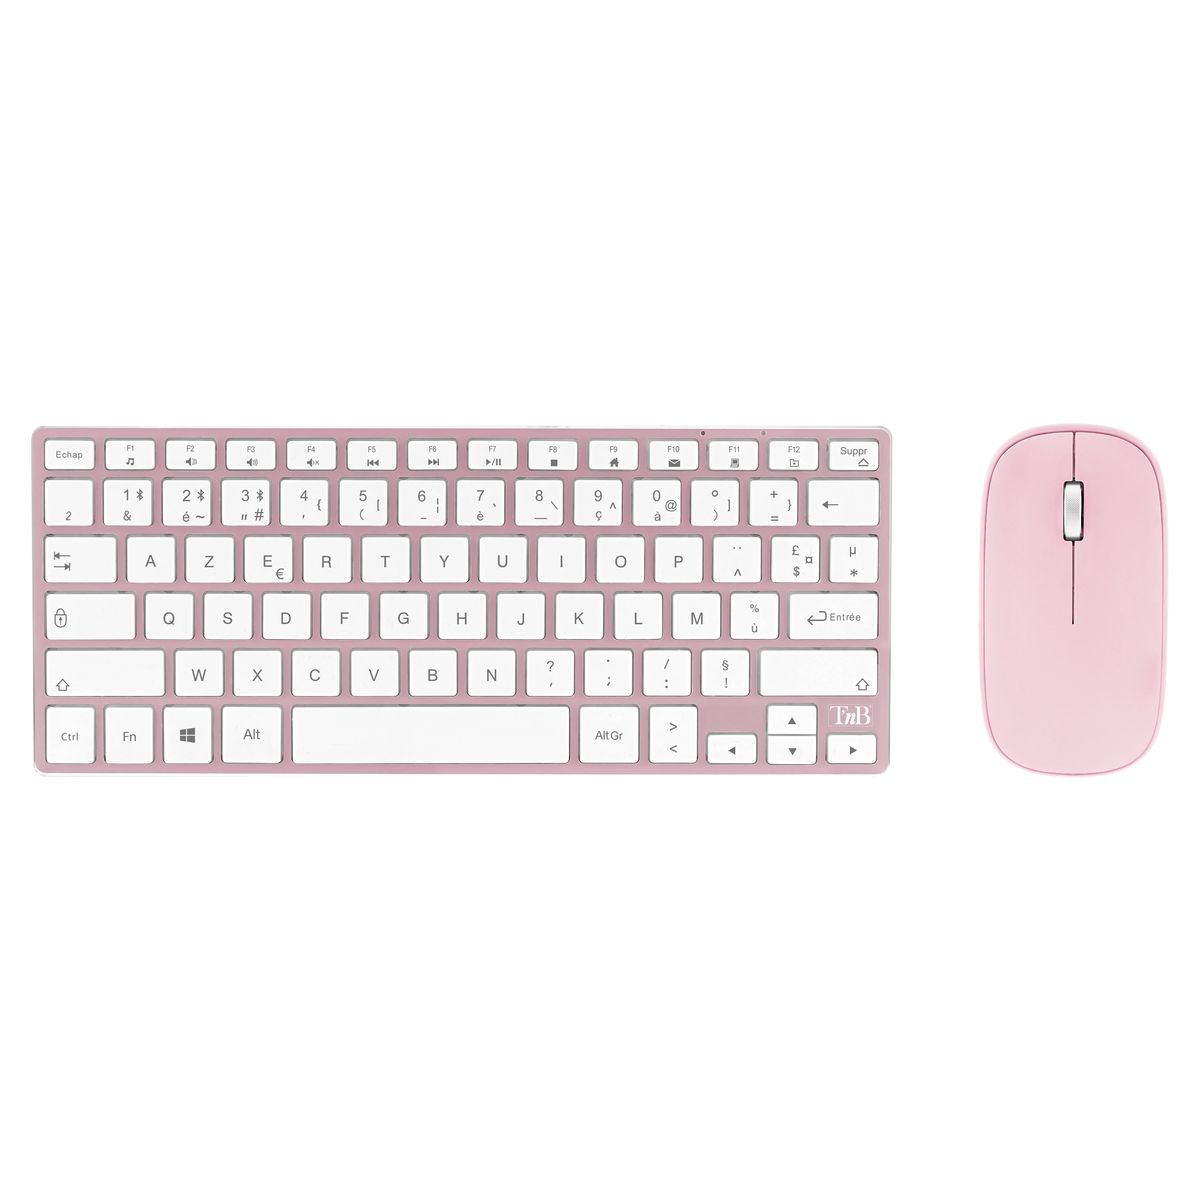 Kit de nettoyage clavier et smartphone rose - 7 en 1